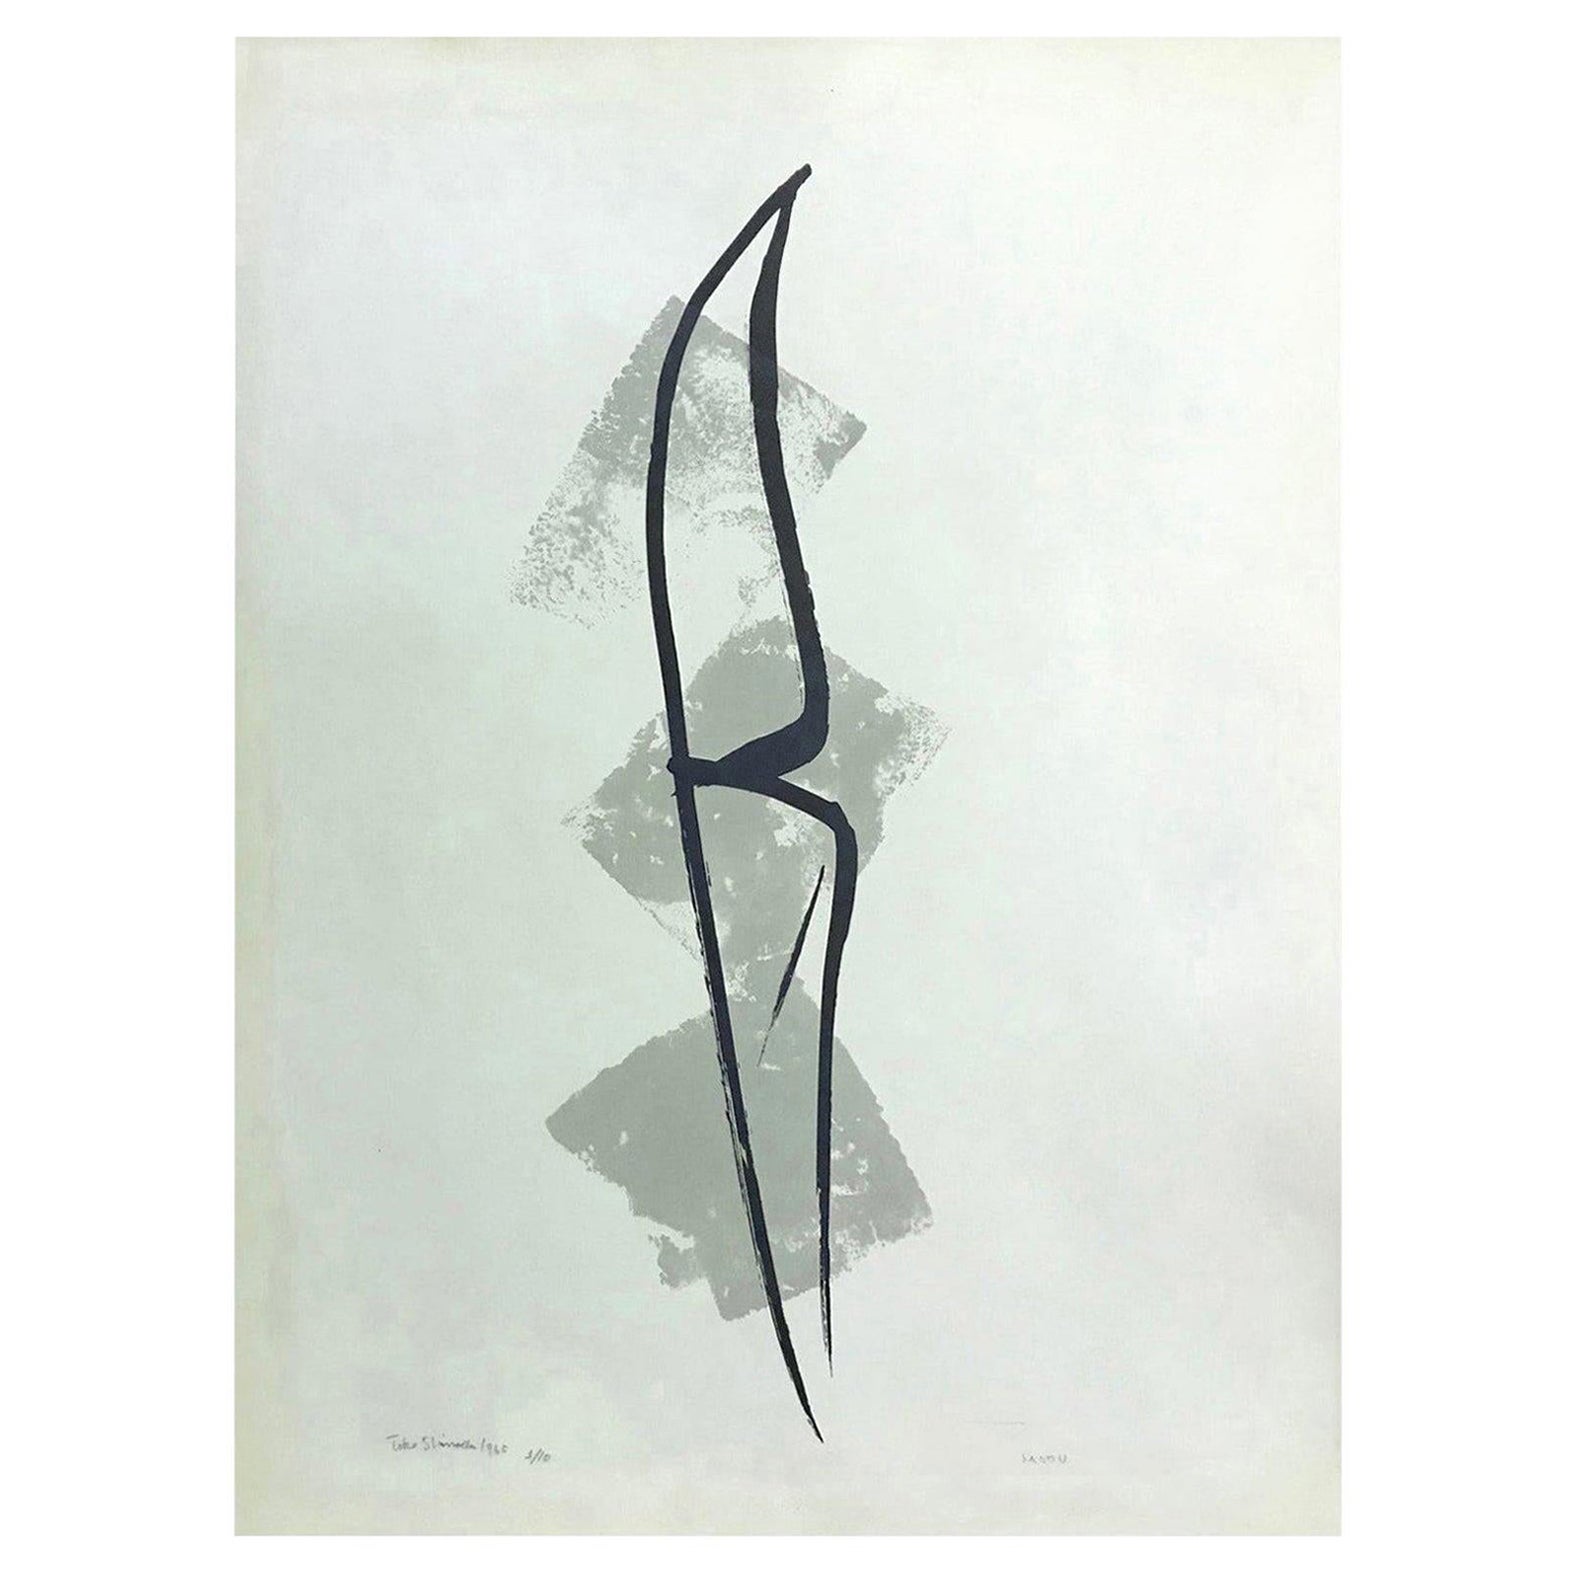 Toko Shinoda Signed Large Limited Edition Japanese Lithograph Print Moon, 1965